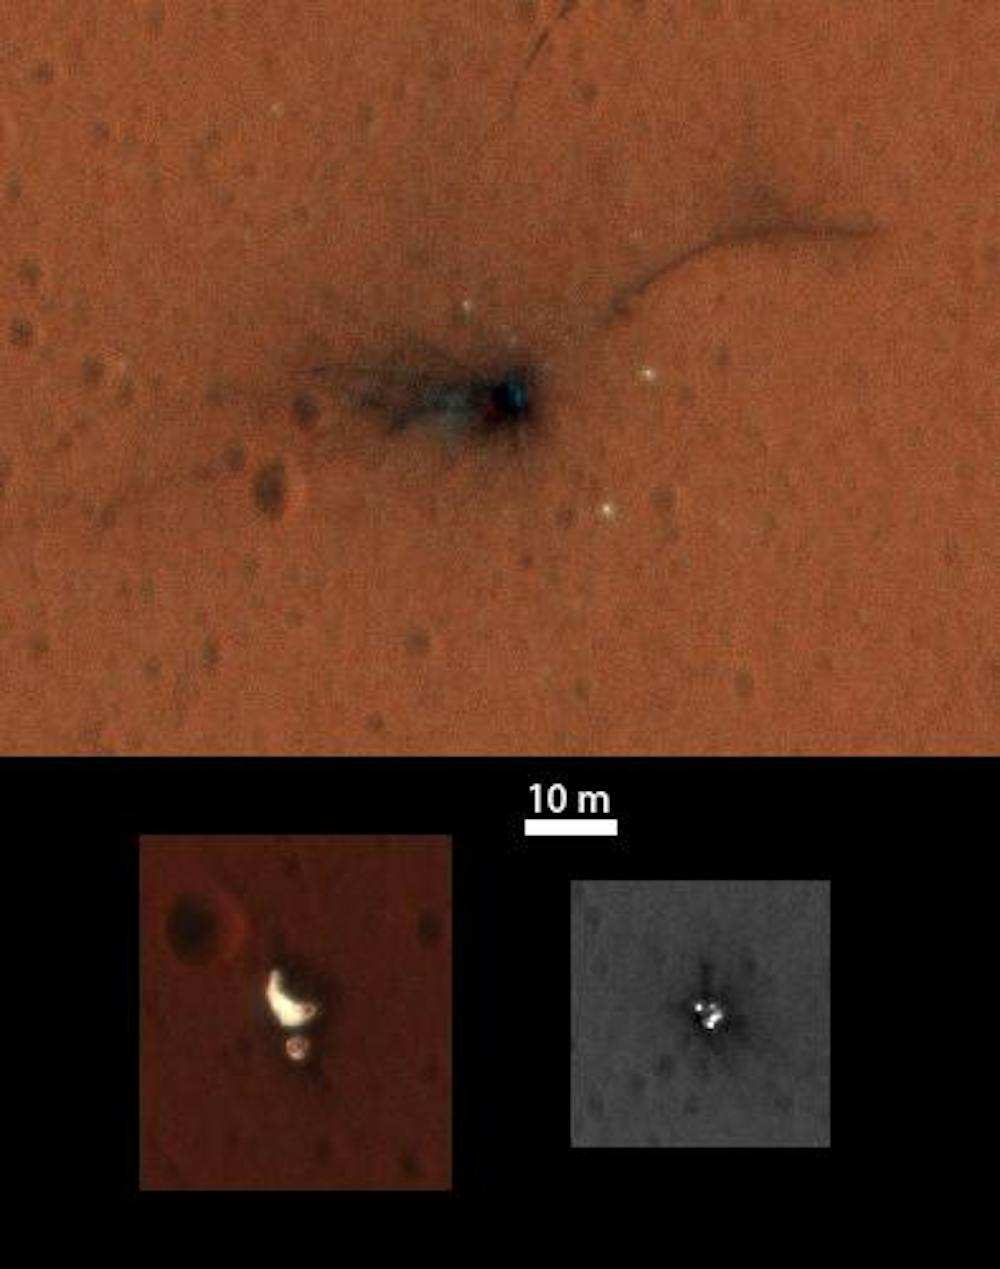 Found: One Missing Mars Probe, Still Intact, Smart News